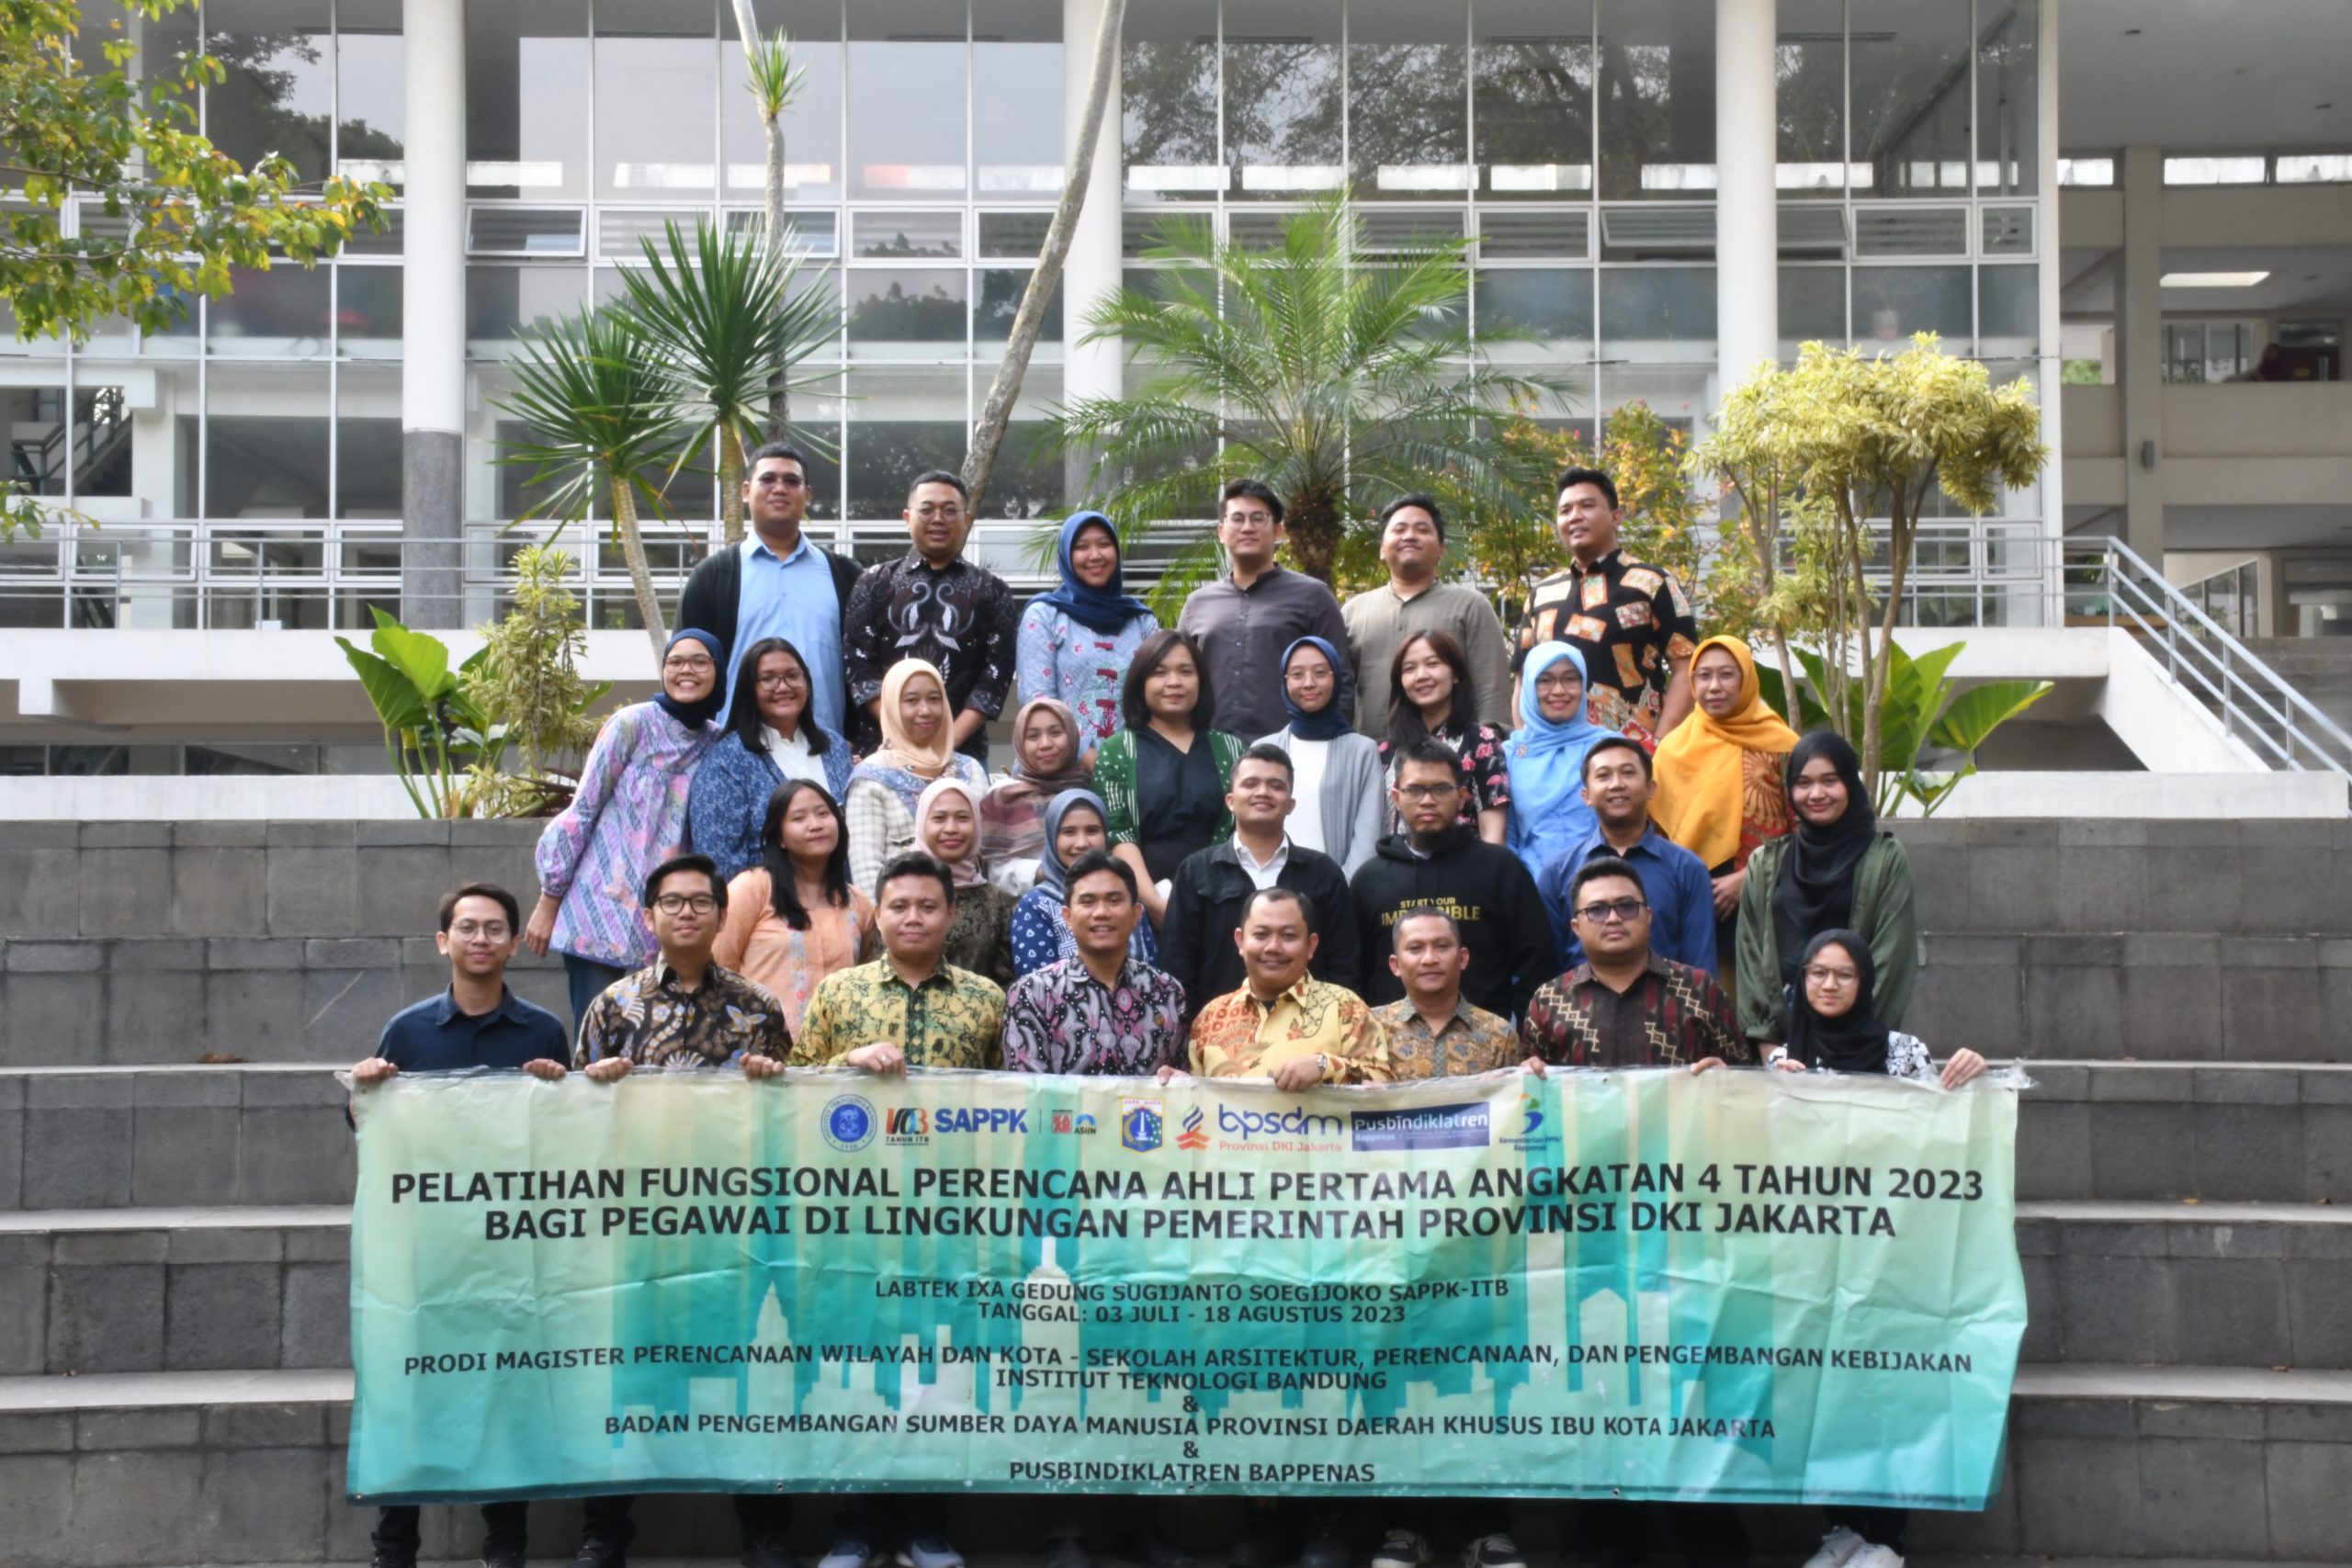 Pelatihan Fungsional Perencana Ahli Pertama bagi Pegawai di Lingkungan Pemprov DKI Jakarta Tahun 2023